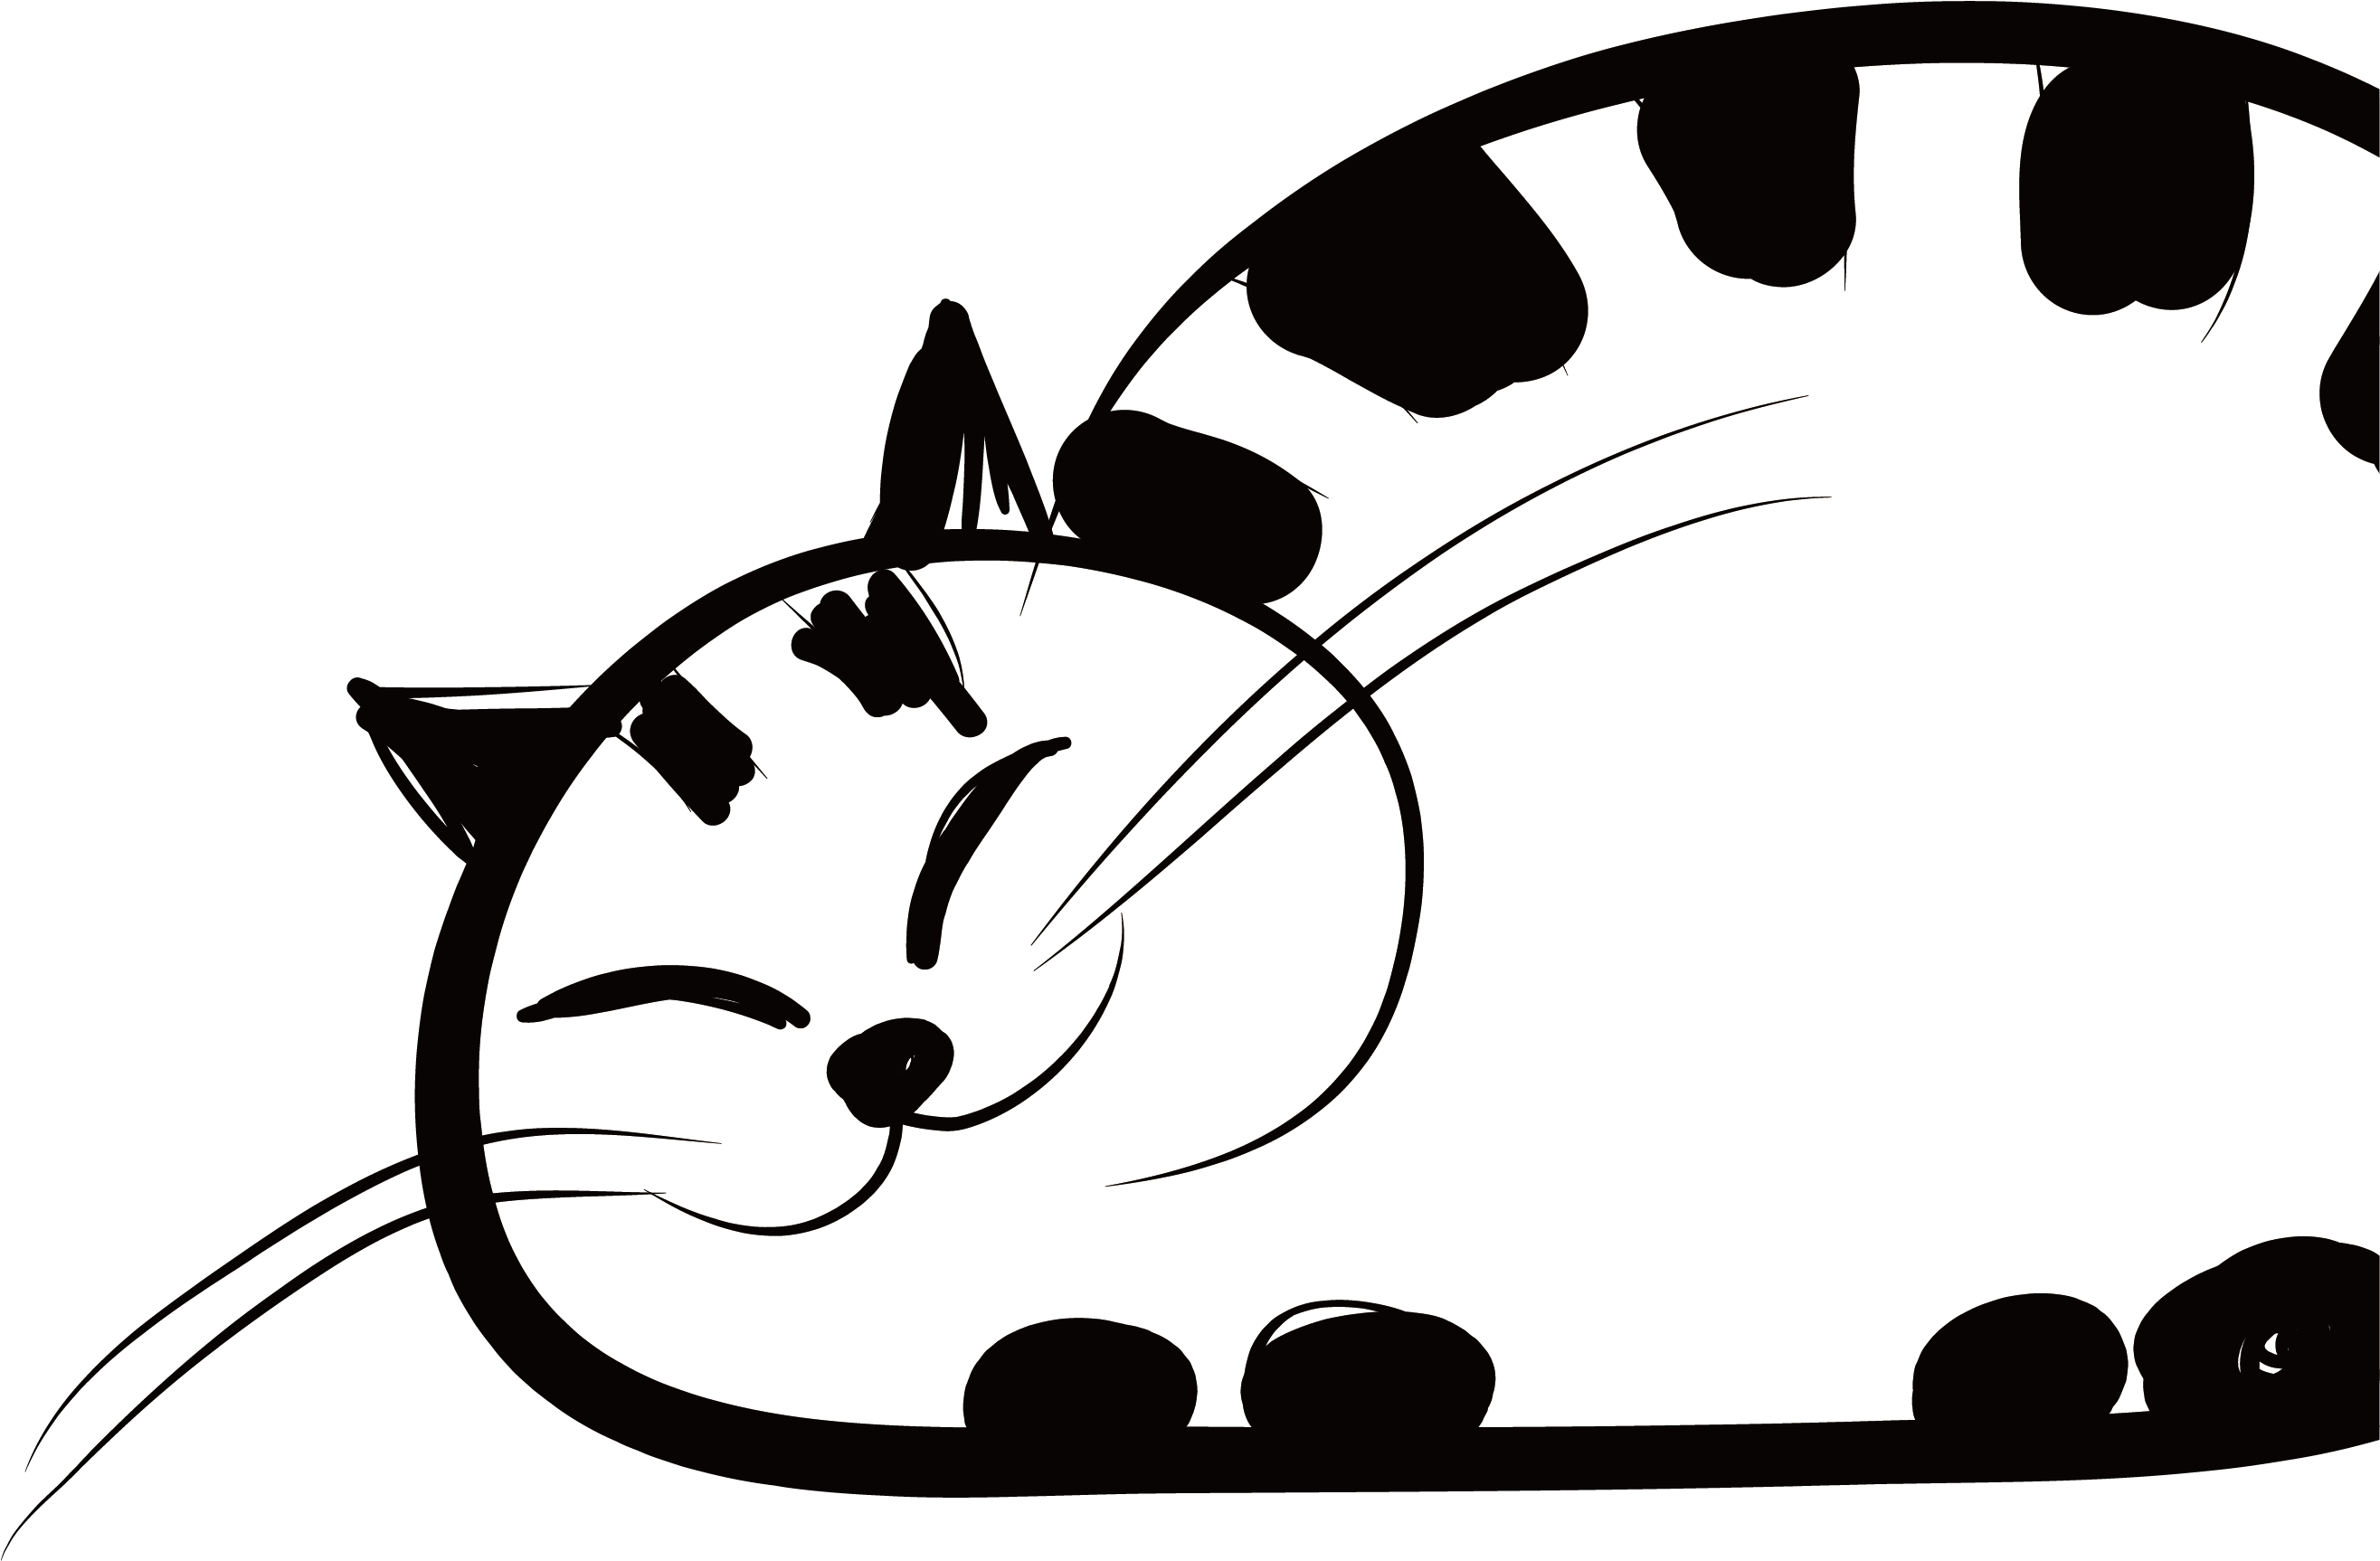 Siamese Cat Silhouette Illustration - Metalum Kaffeetasse / Kaffeebecher / Katzen / Geschenktasse (3624x1922)